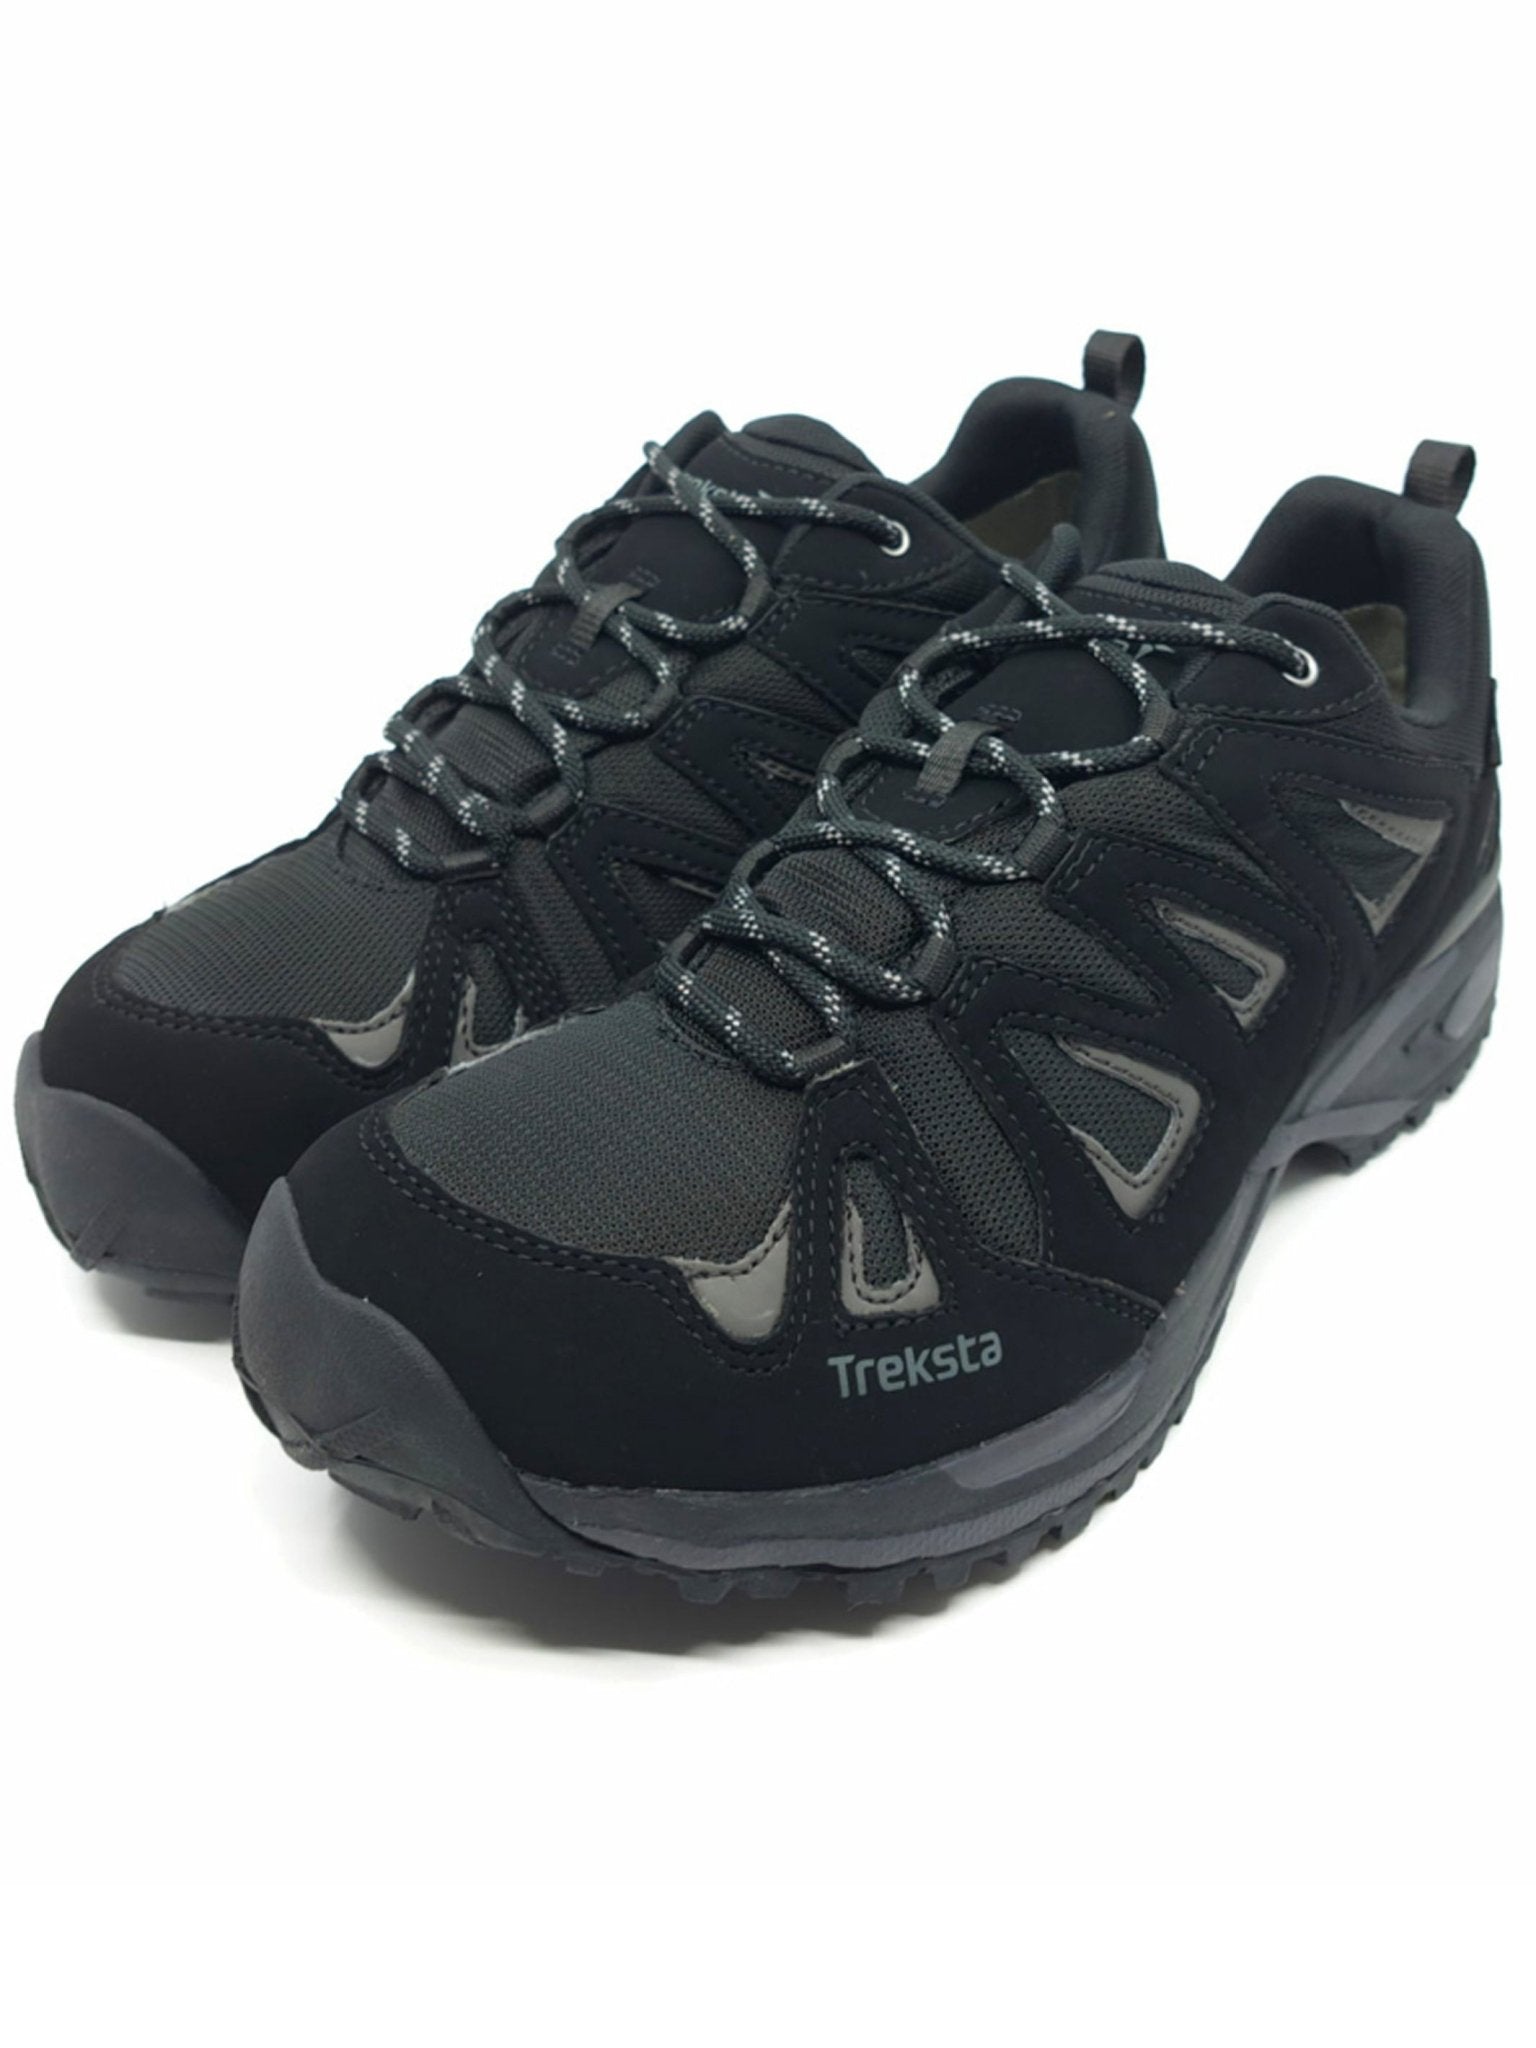 Treksta Treksta - Buxton Lace Low GTX - Gore - Tex Waterproof Low Lace Trail / walking shoe / trainer Shoes